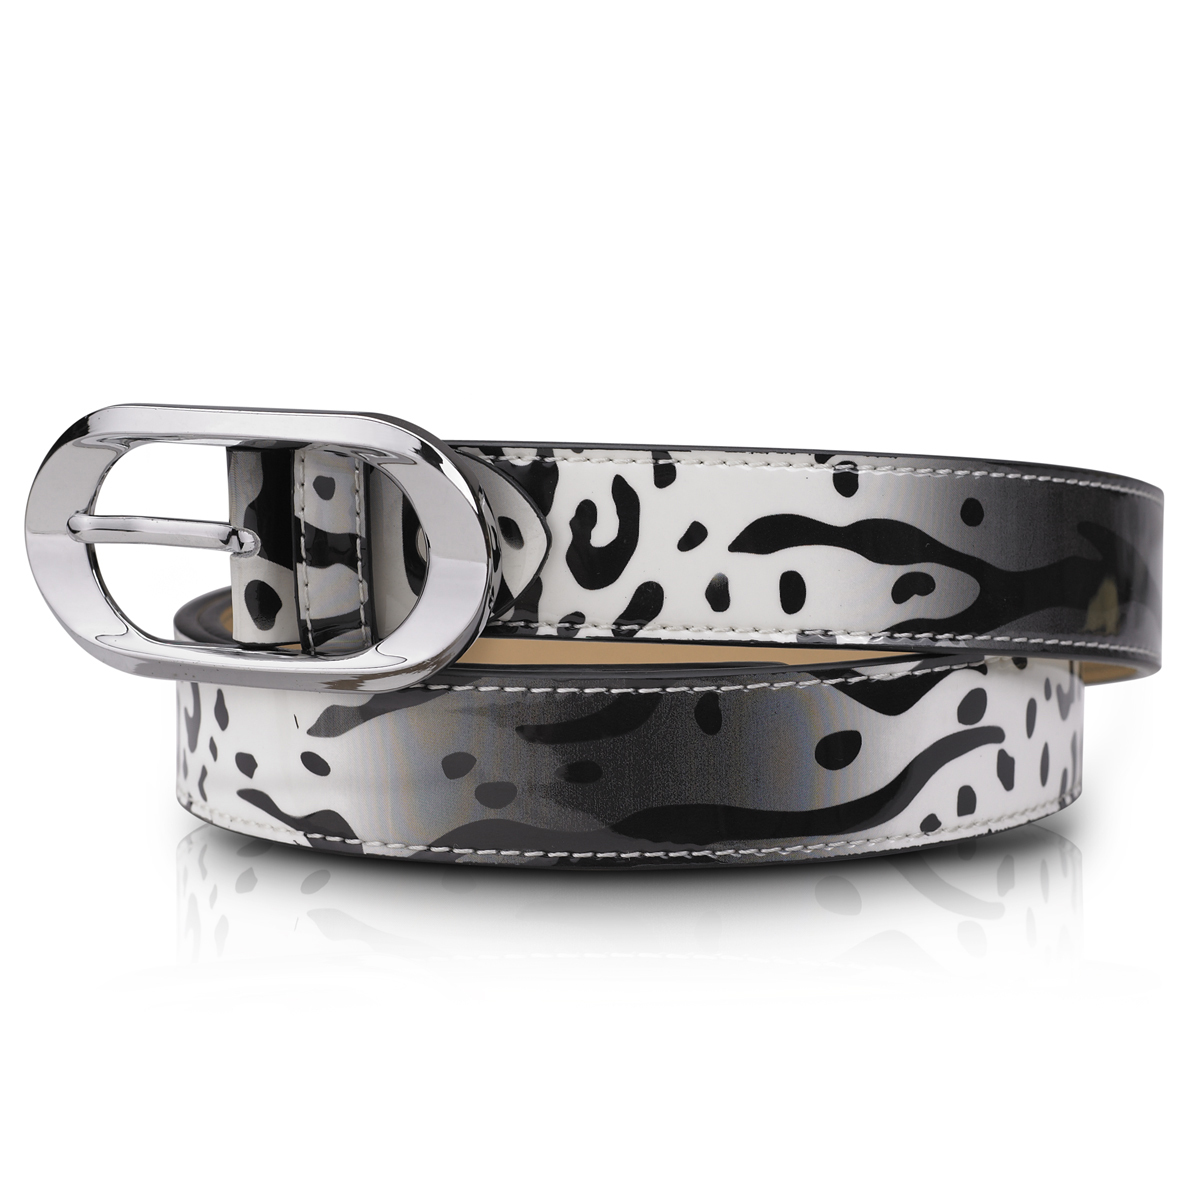 fashion women's strap cowhide genuine leather belt pin buckle white black fashion f0869 100% genuine leather belt designer belt